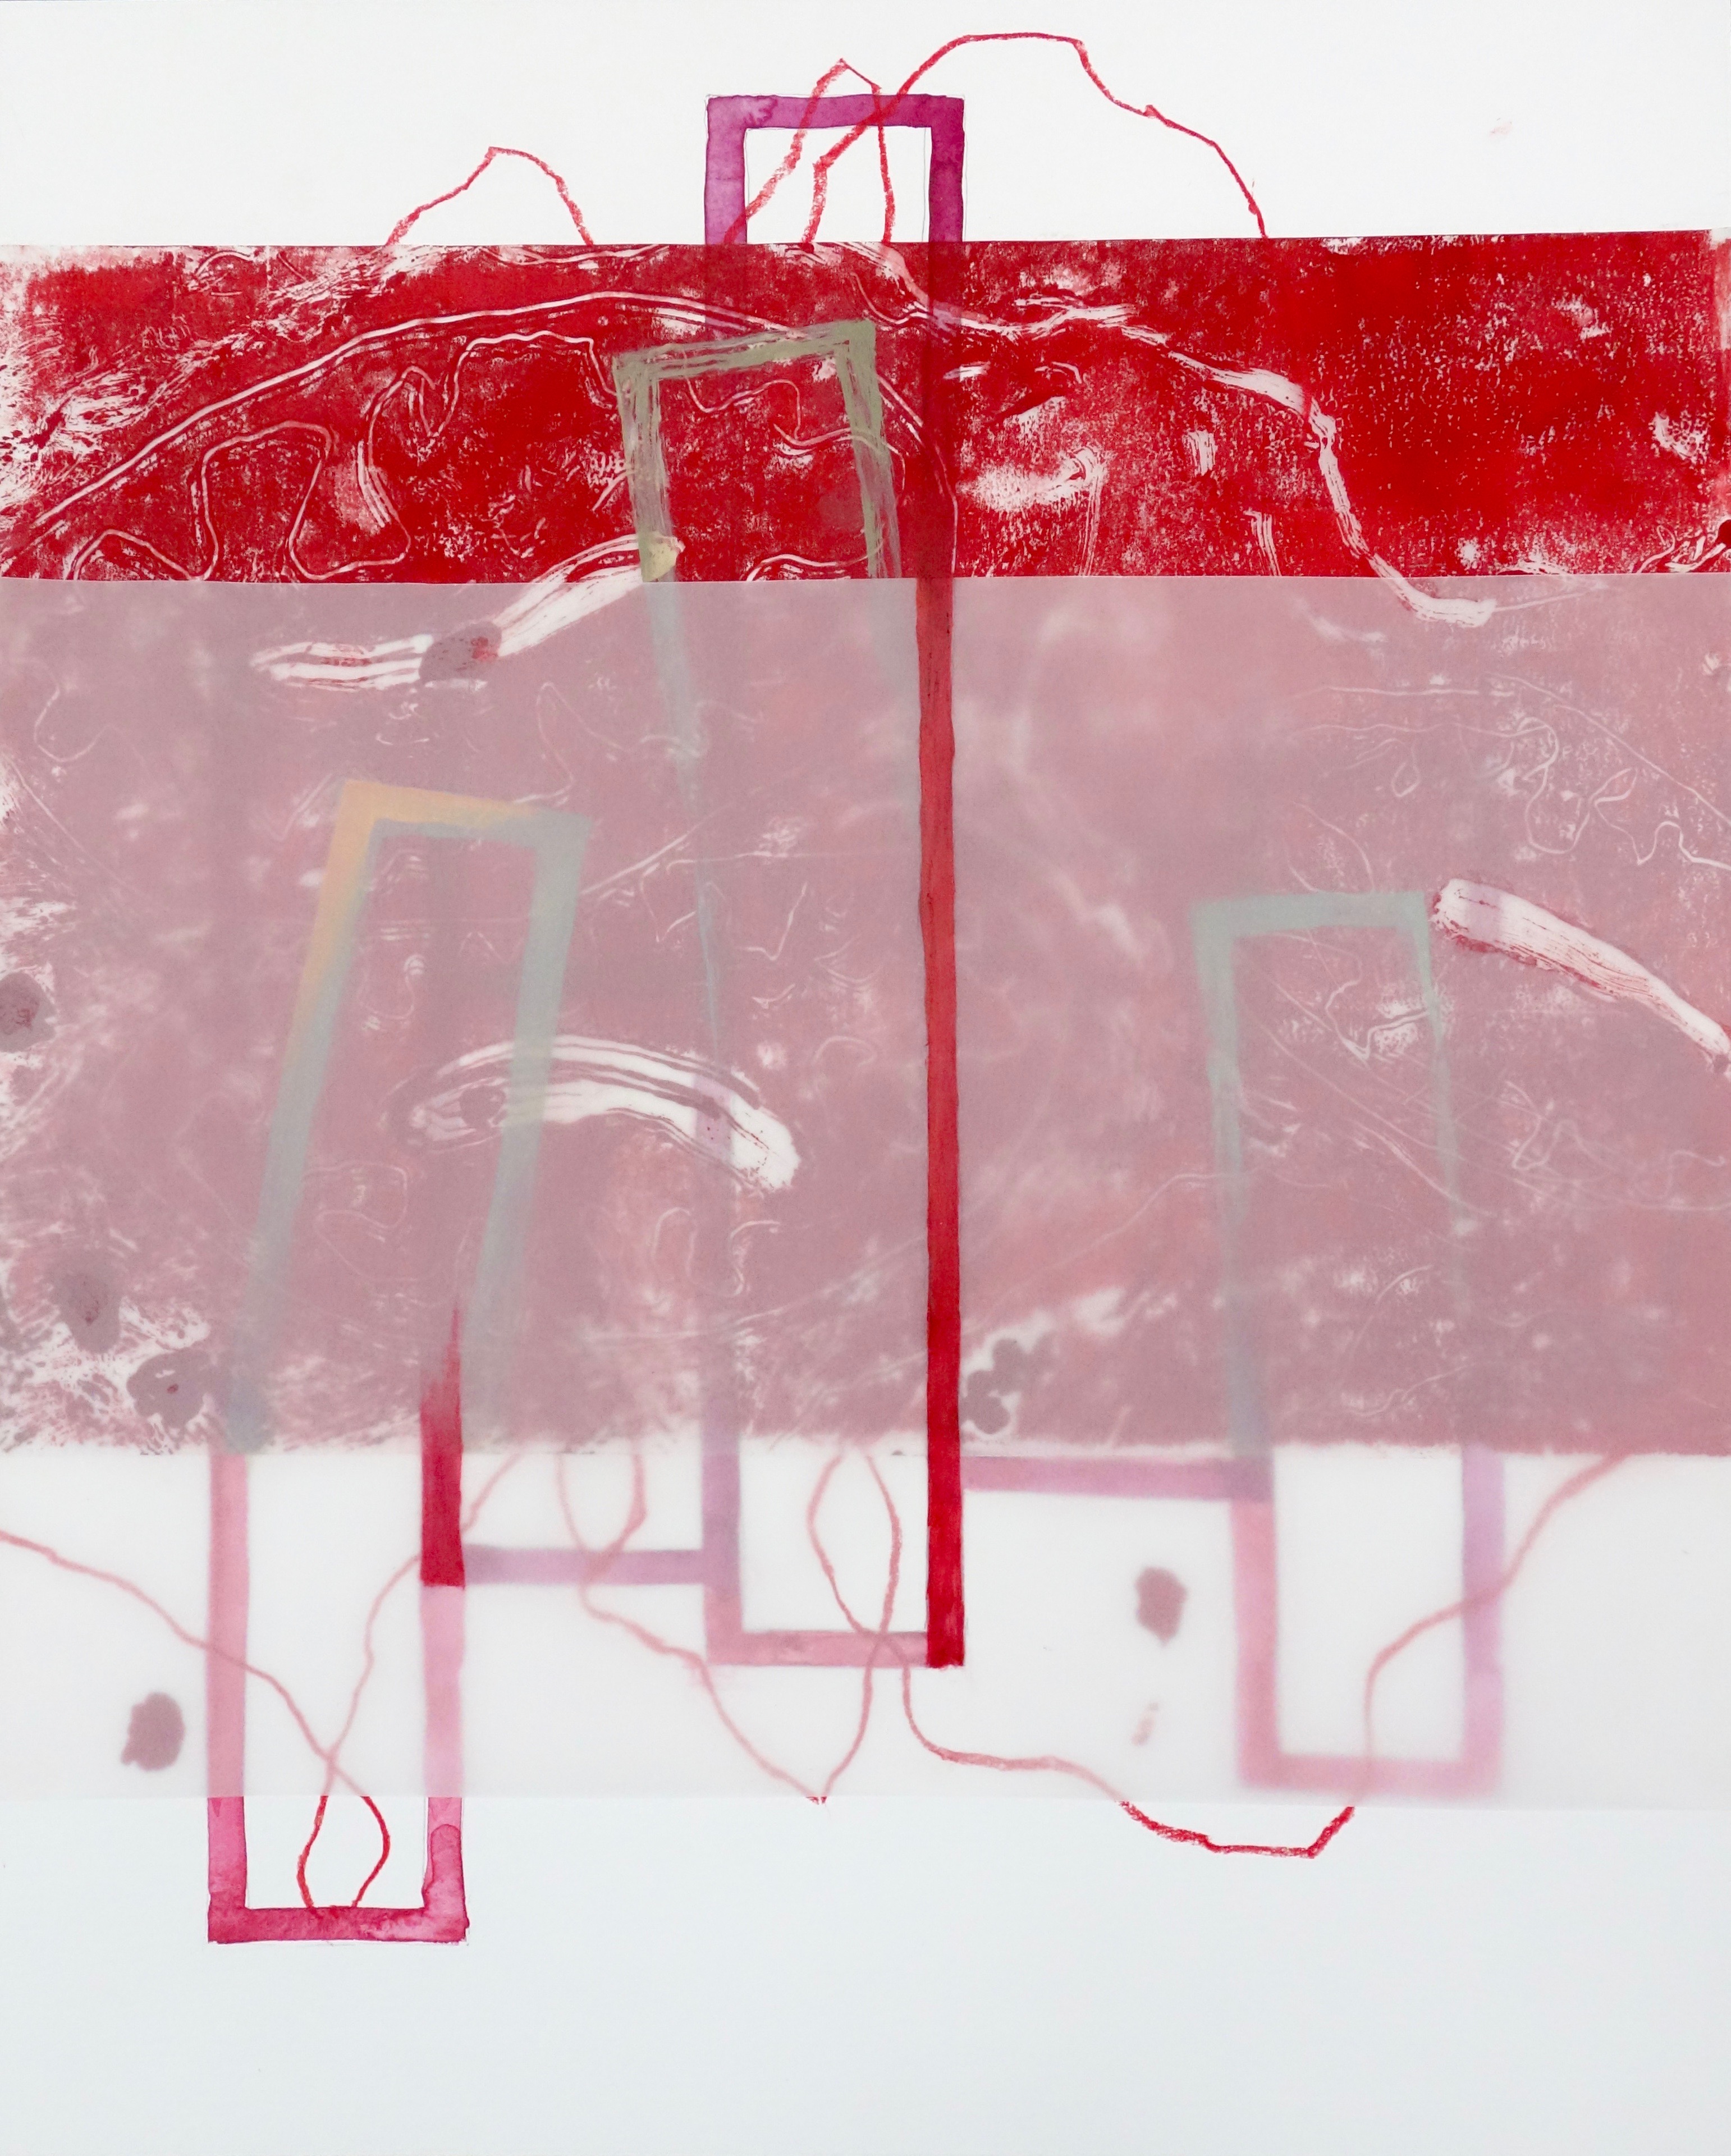 Block Painting 3, Versch. Materialien auf Papier und Transparentpapier, 2021, 50 x 40 cm, Erwin Holl